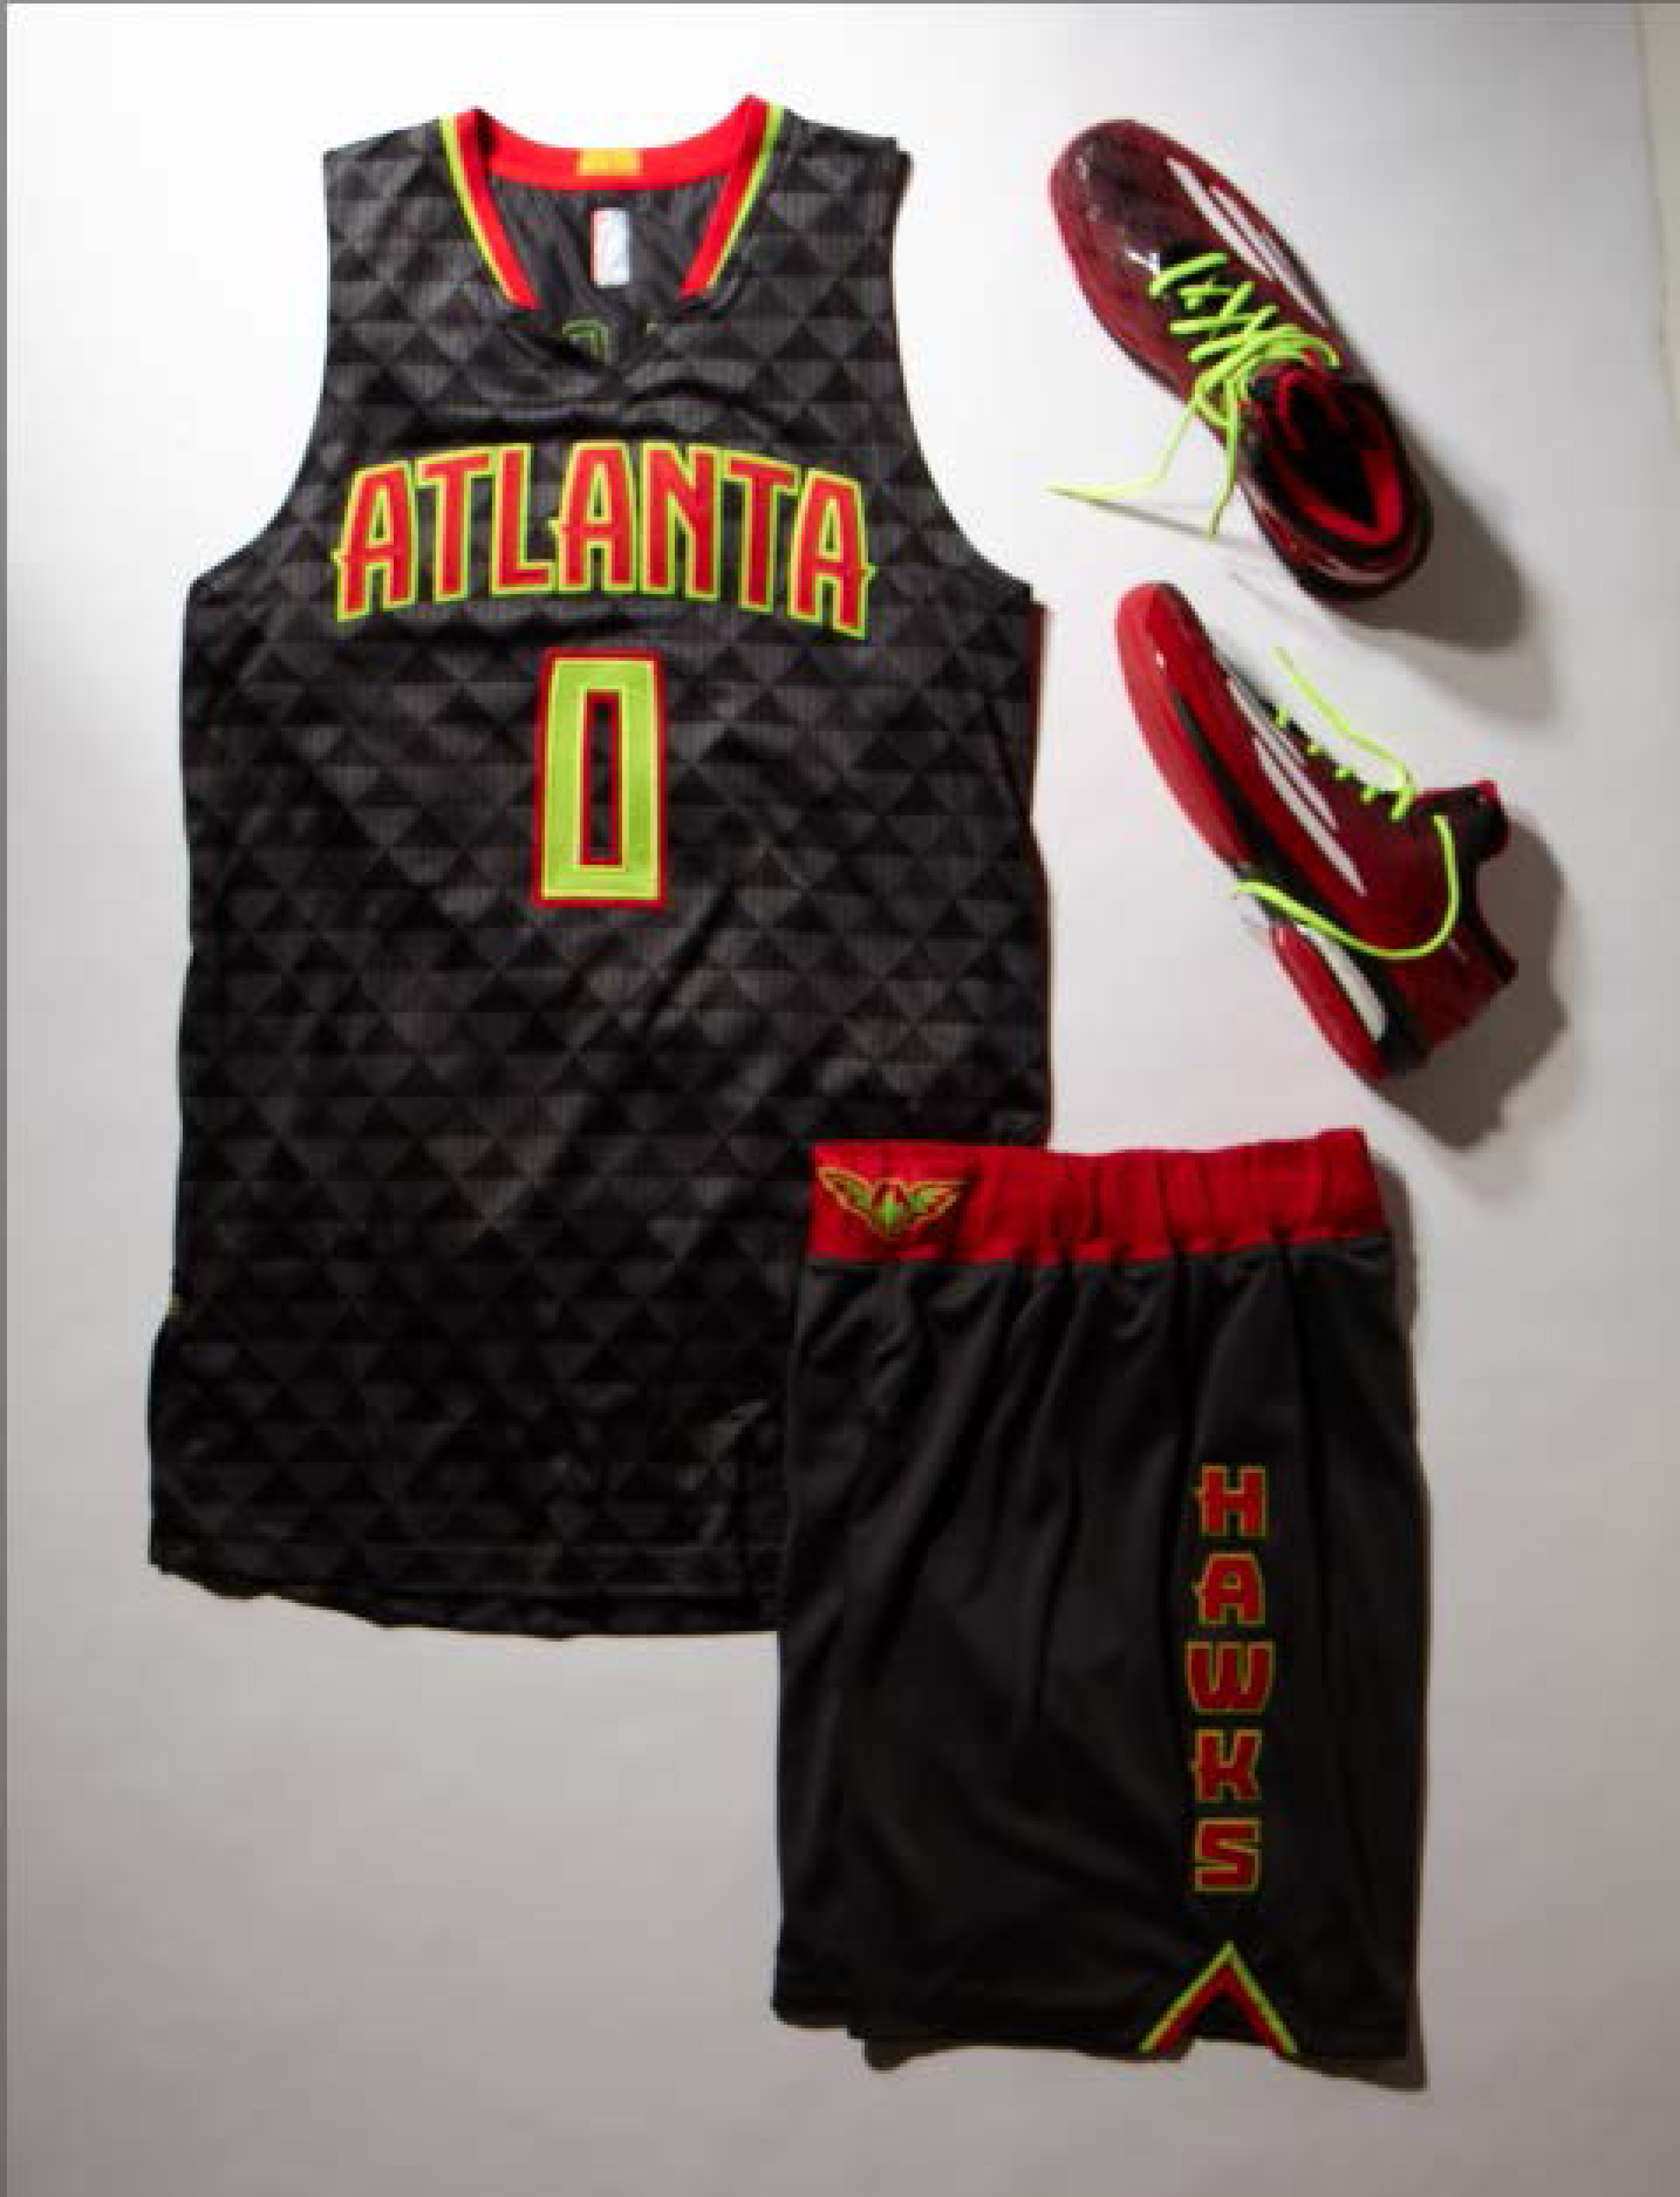 Atlanta Hawks Unveil New Uniforms, Court for 50th Season